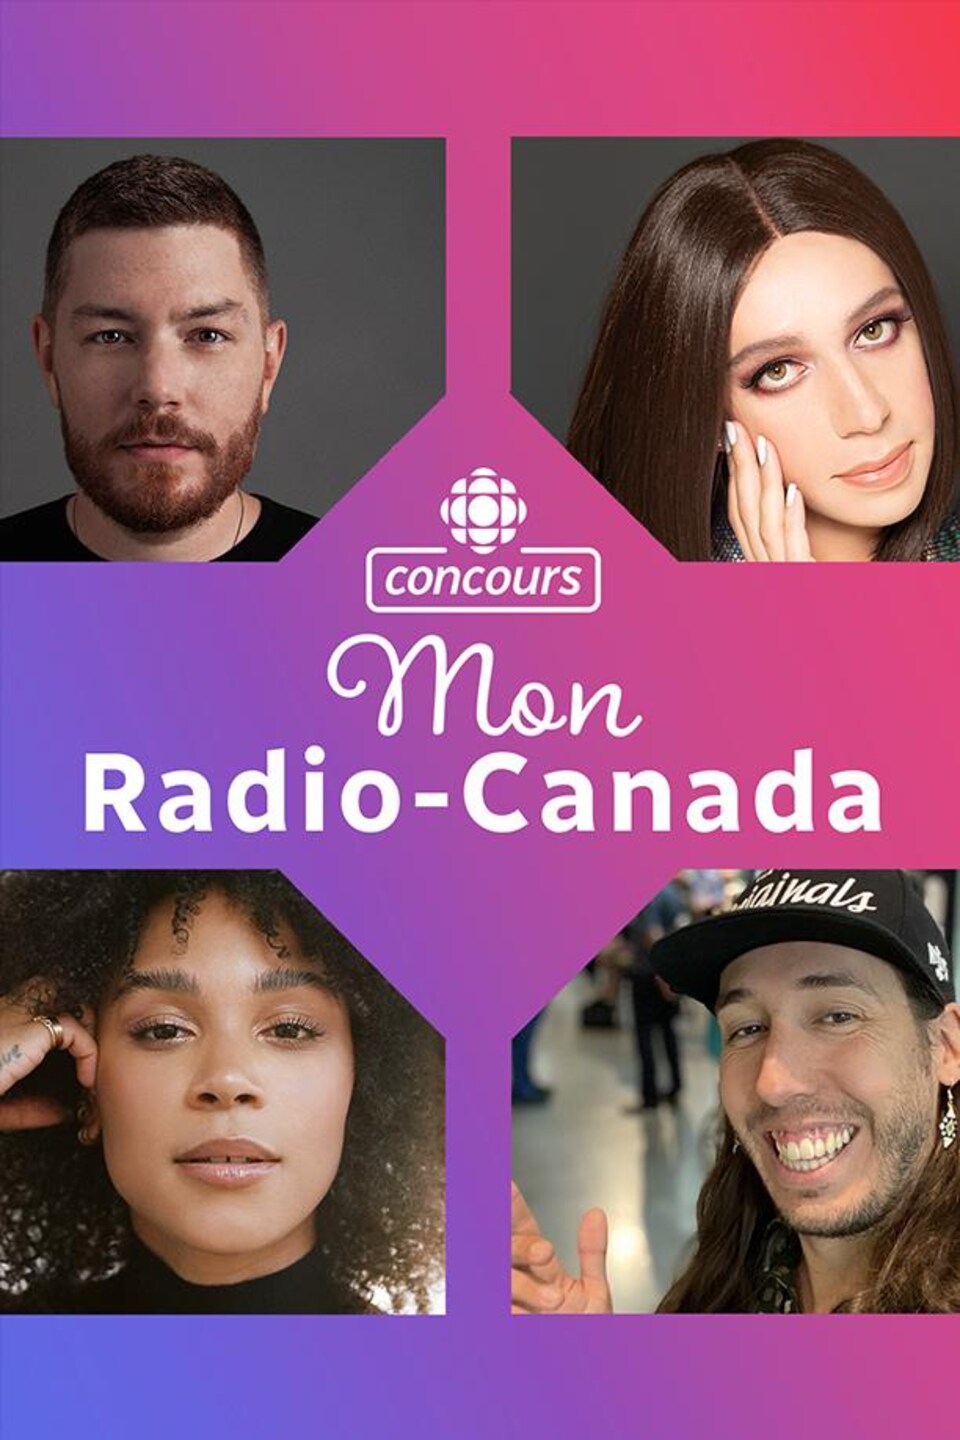 Concours 
Mon Radio-Canada
ICI Radio-Canada